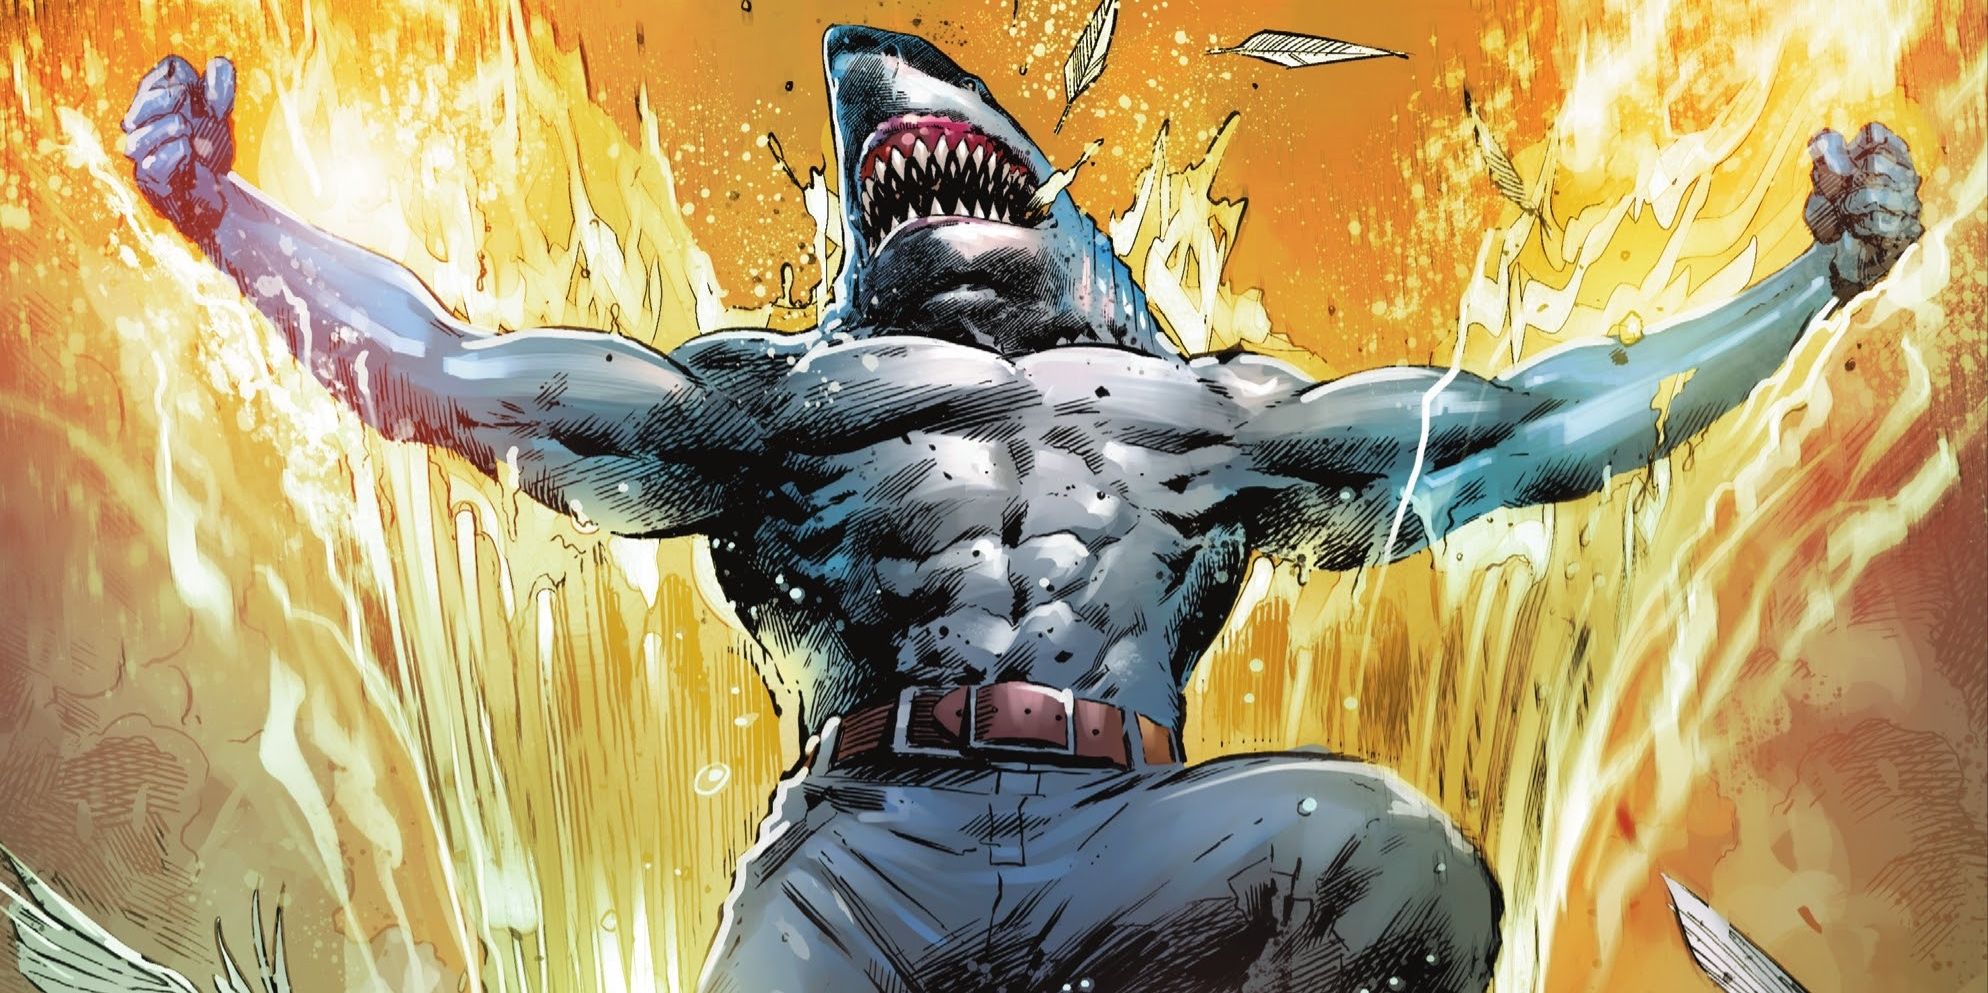 The villain King Shark from the Aquaman comics.